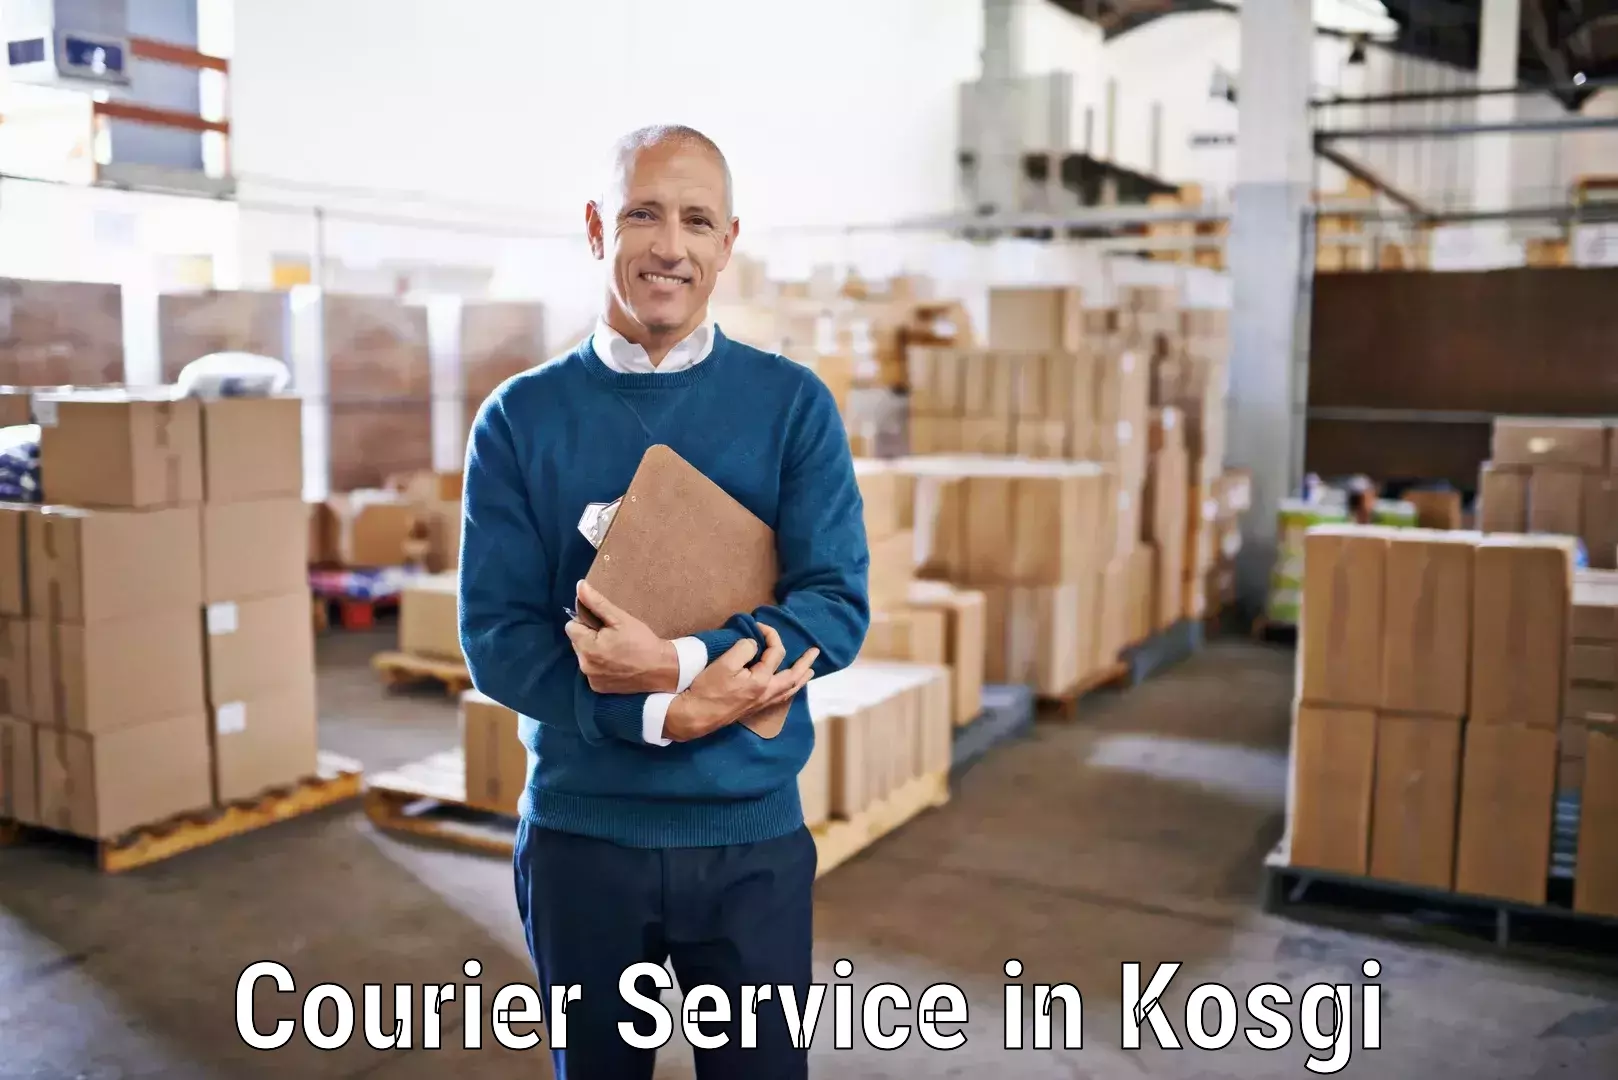 Lightweight parcel options in Kosgi